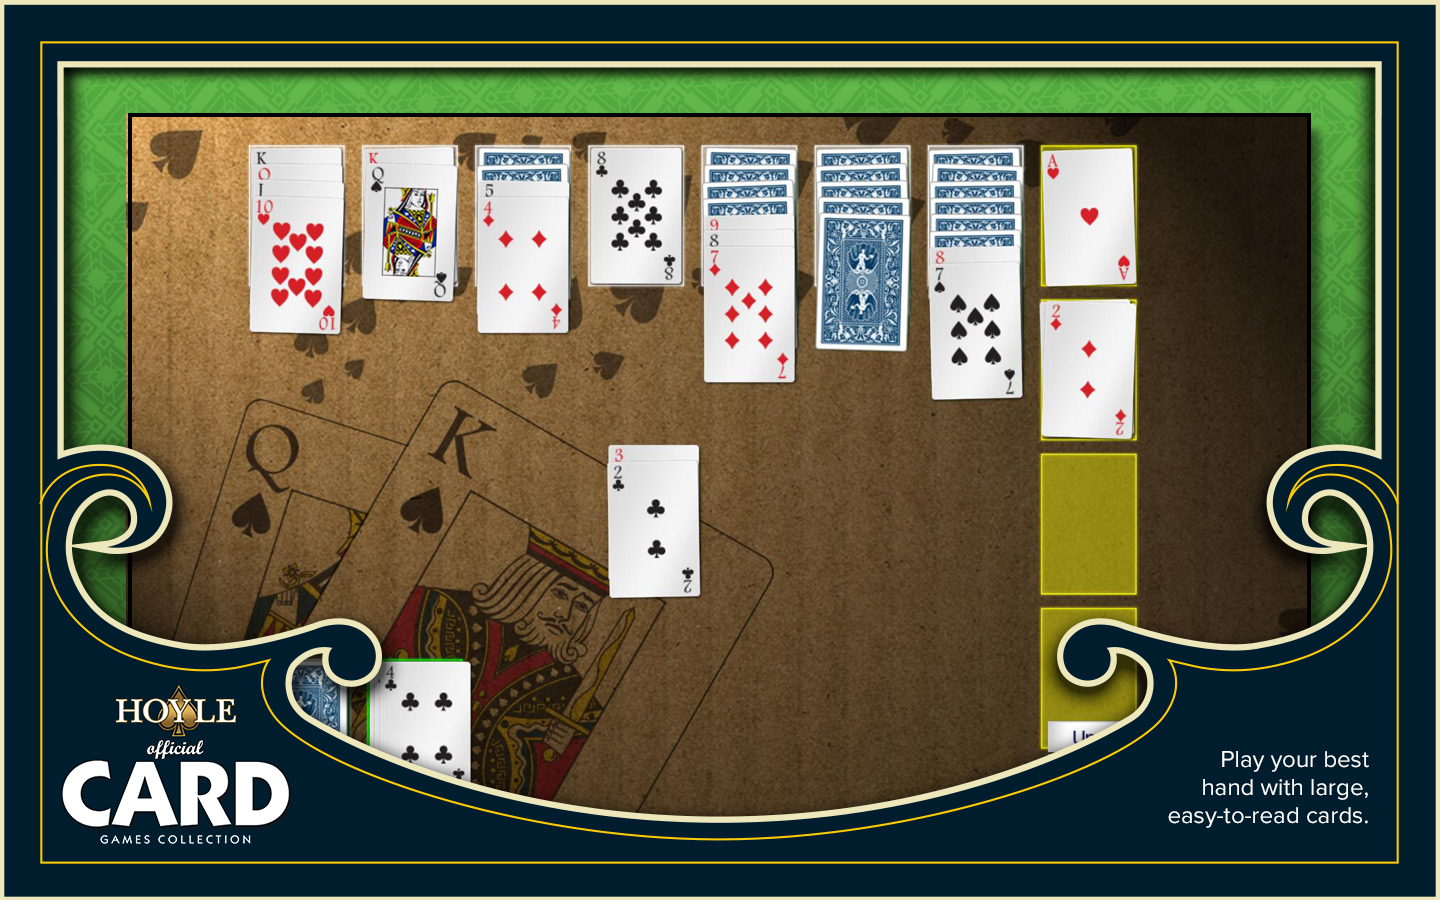 https://www.macgamestore.com/images_screenshots/hoyle-official-card-games-34903.jpg